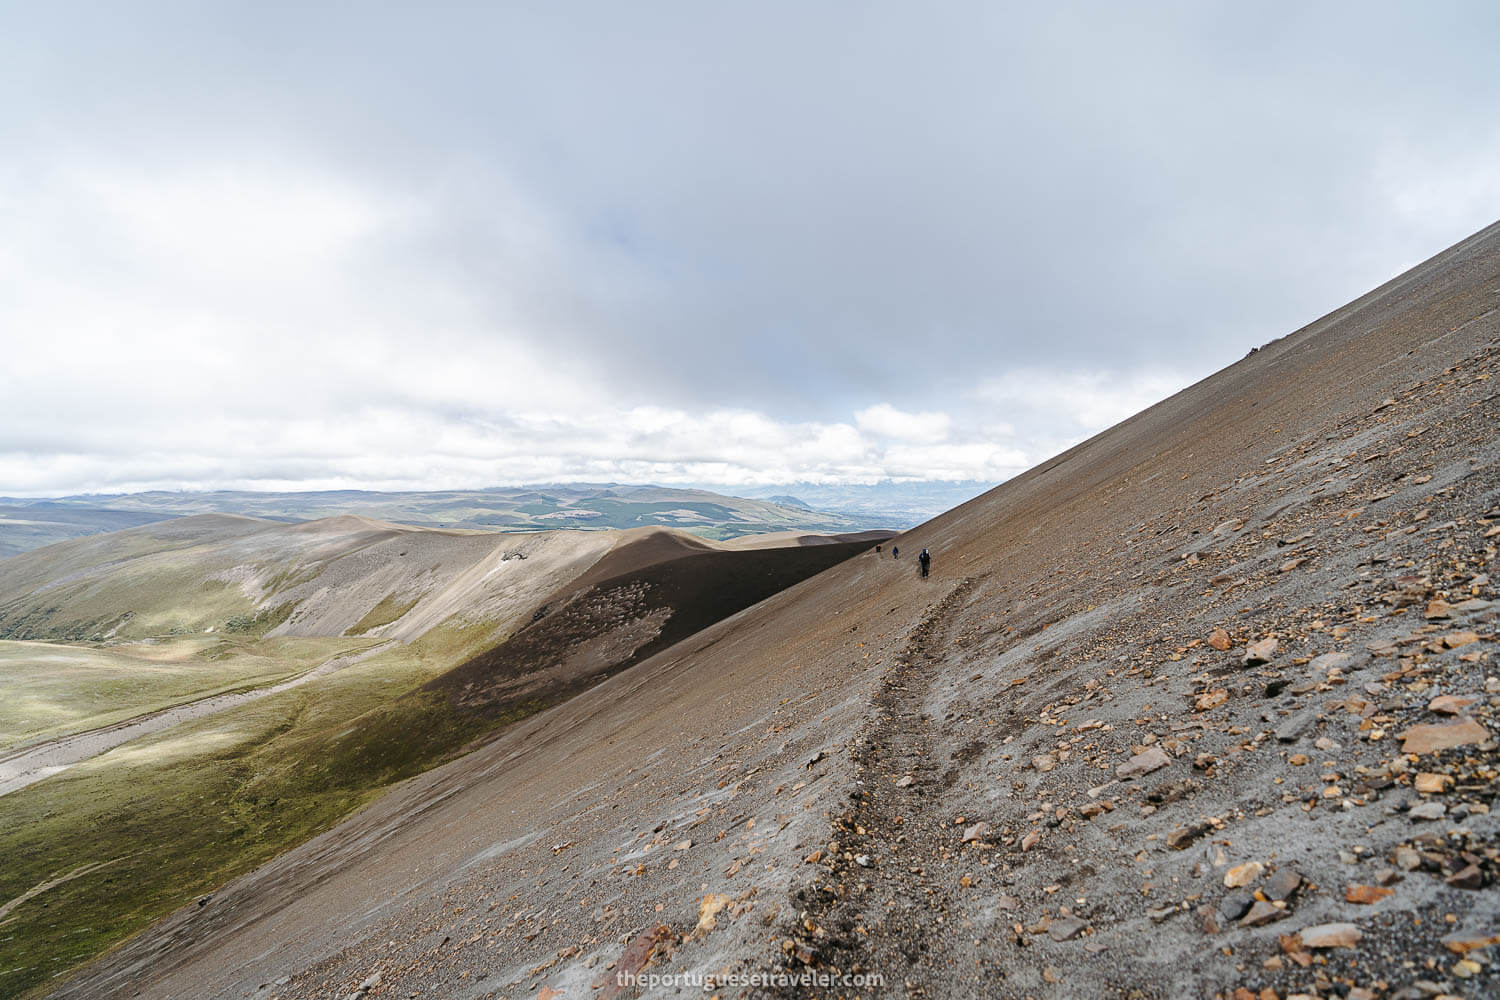 The path before reaching Cerro Morurco Mountain